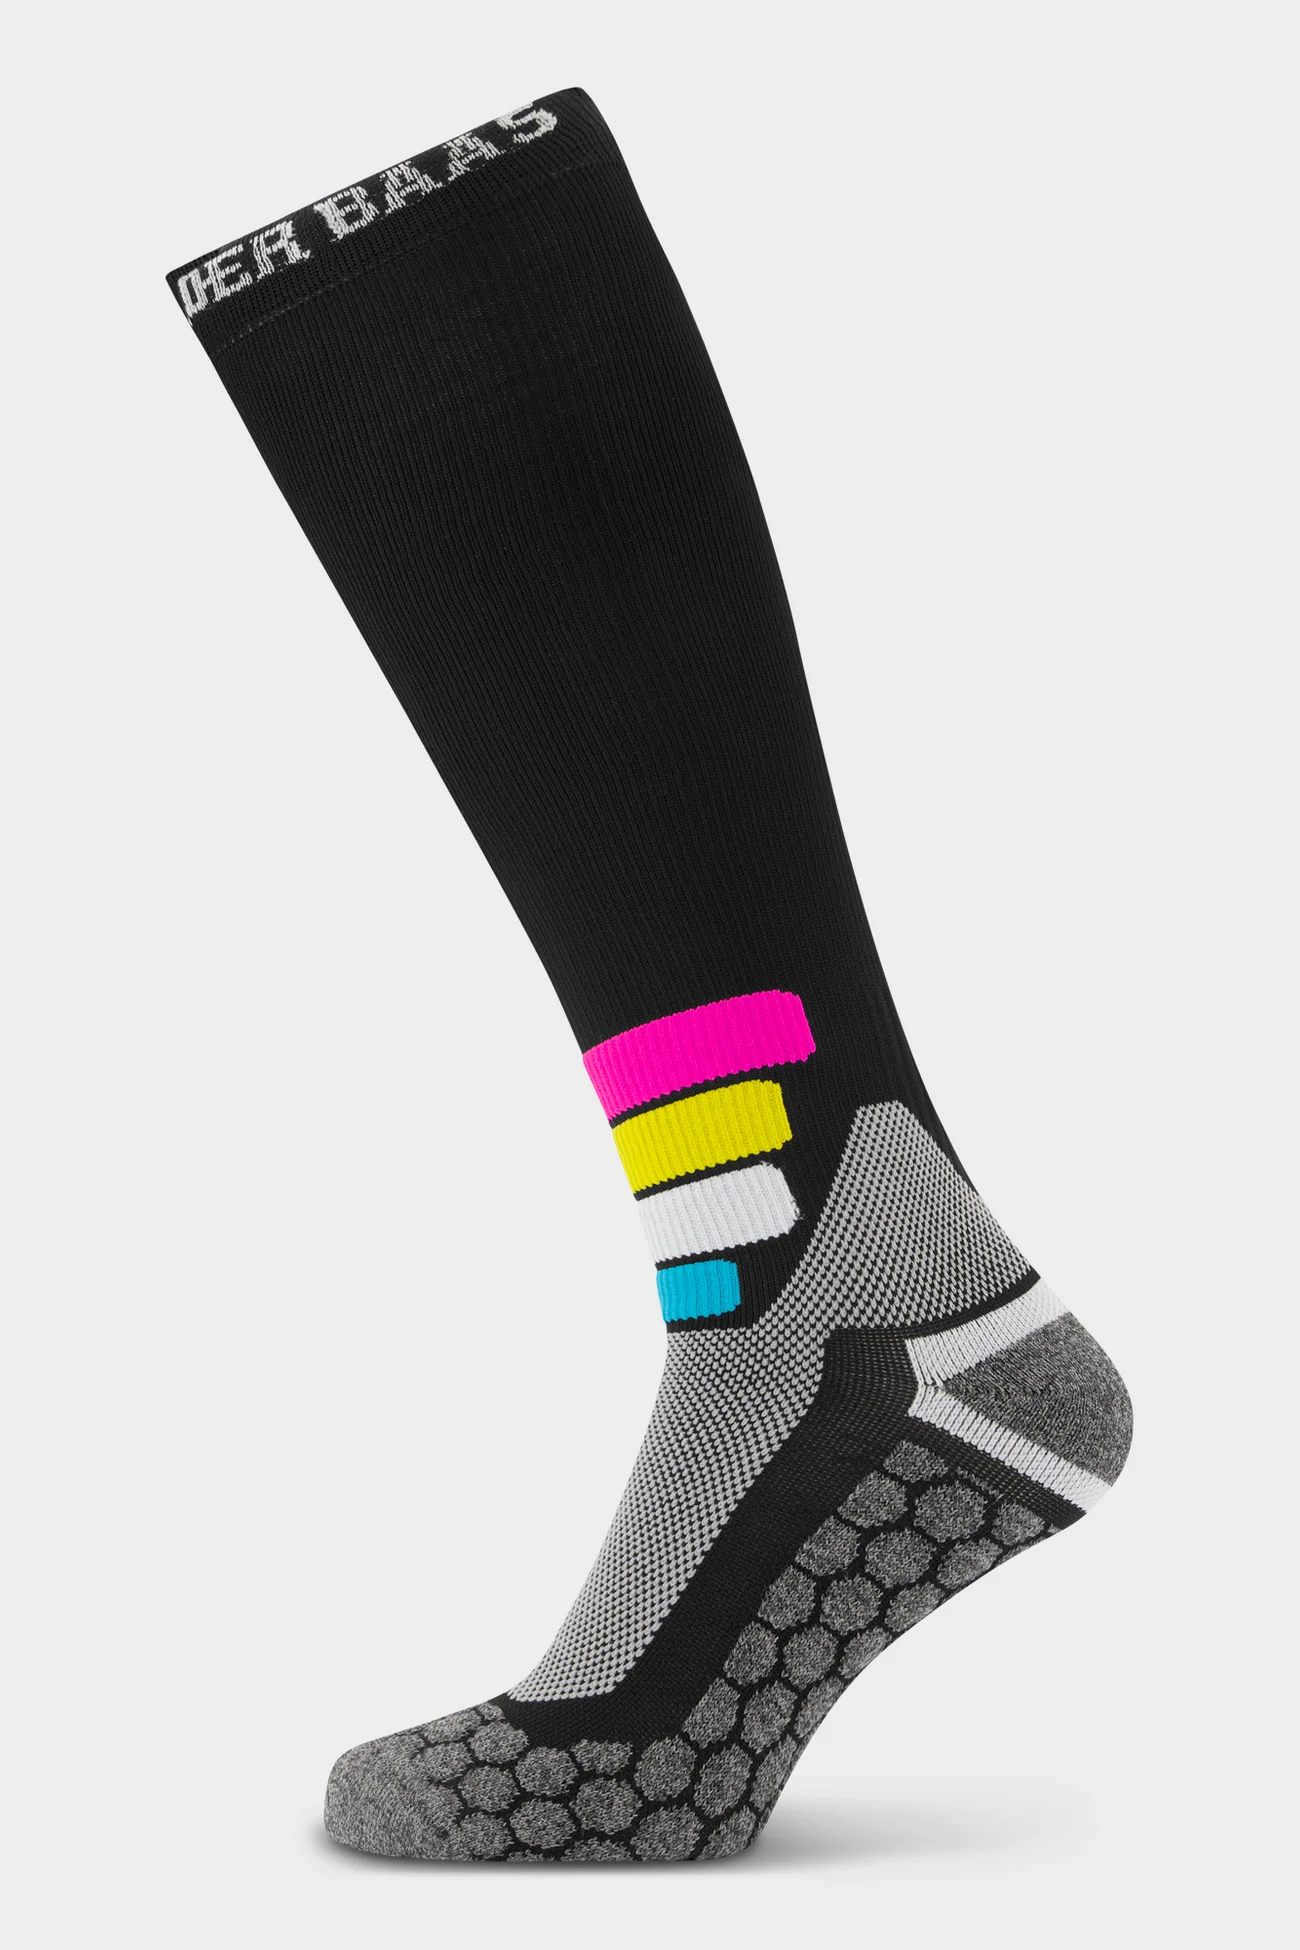 Poederbaas Technical Ski Socks Compress Merino Pro zwart